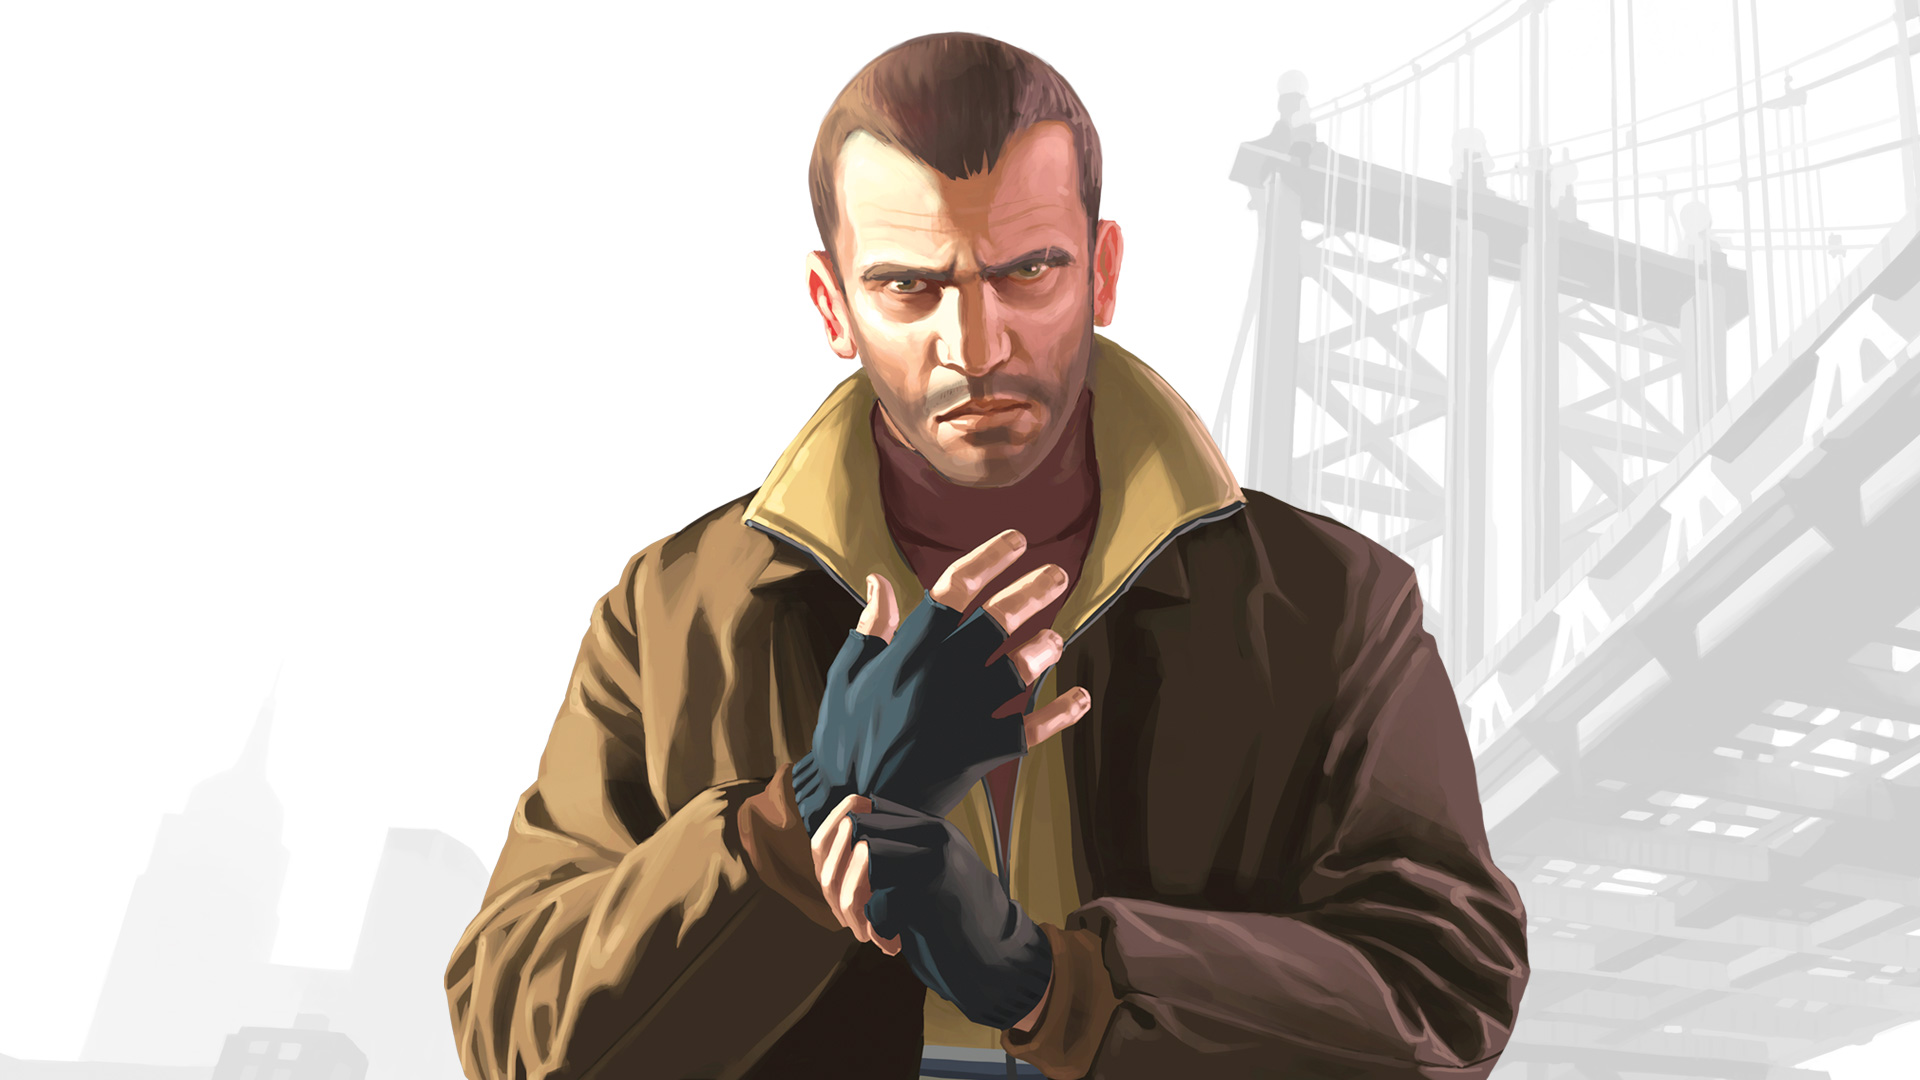 Niko Bellic, un personnage emblématique du jeu vidéo |  Source : Rockstar